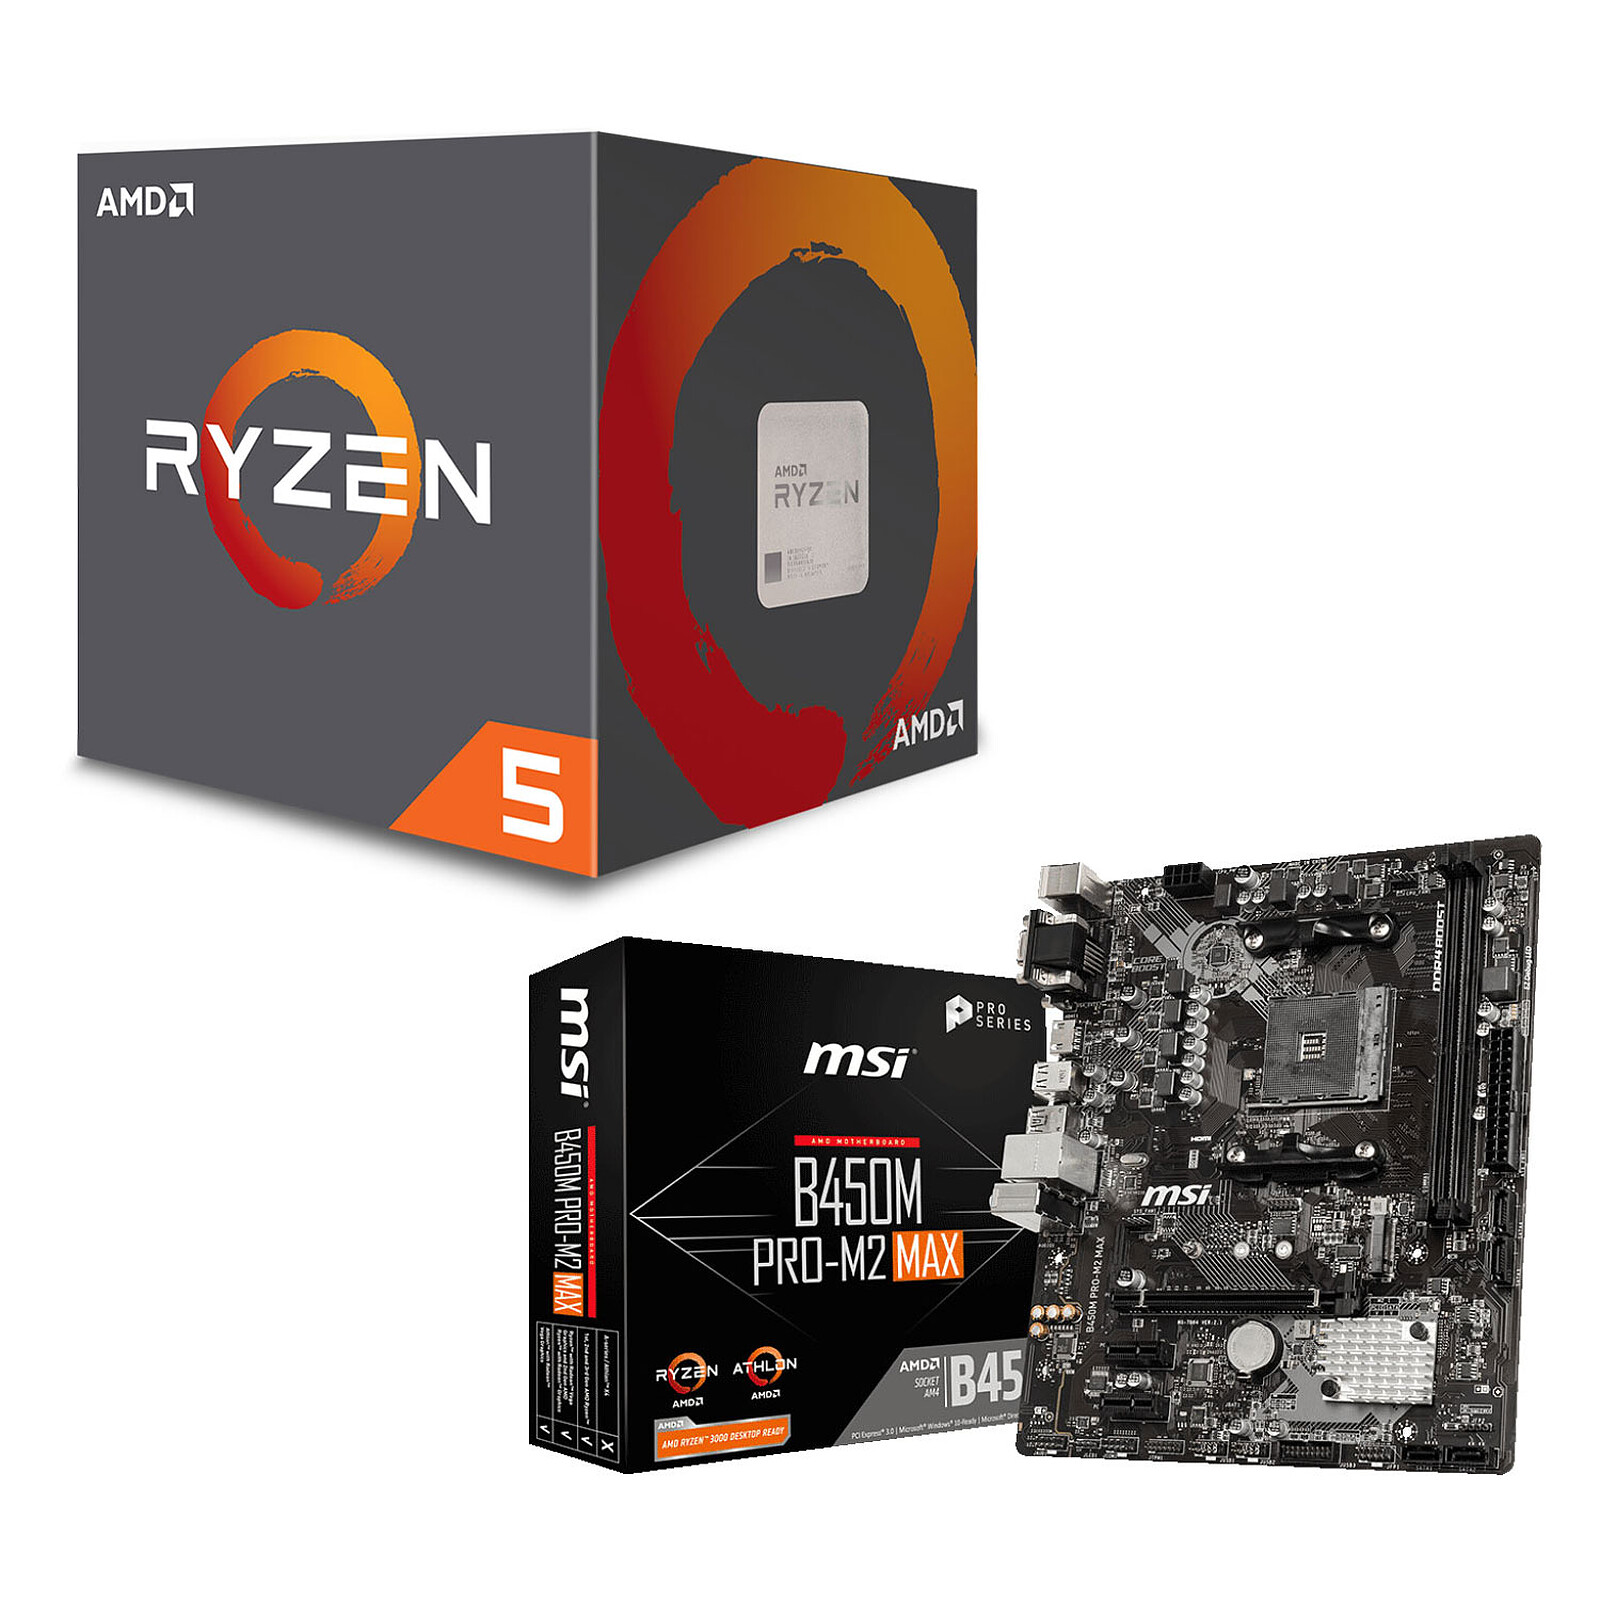 PC Upgrade Kit AMD Ryzen 5 1600 AF MSI B450M PRO-M2 MAX - Upgrade